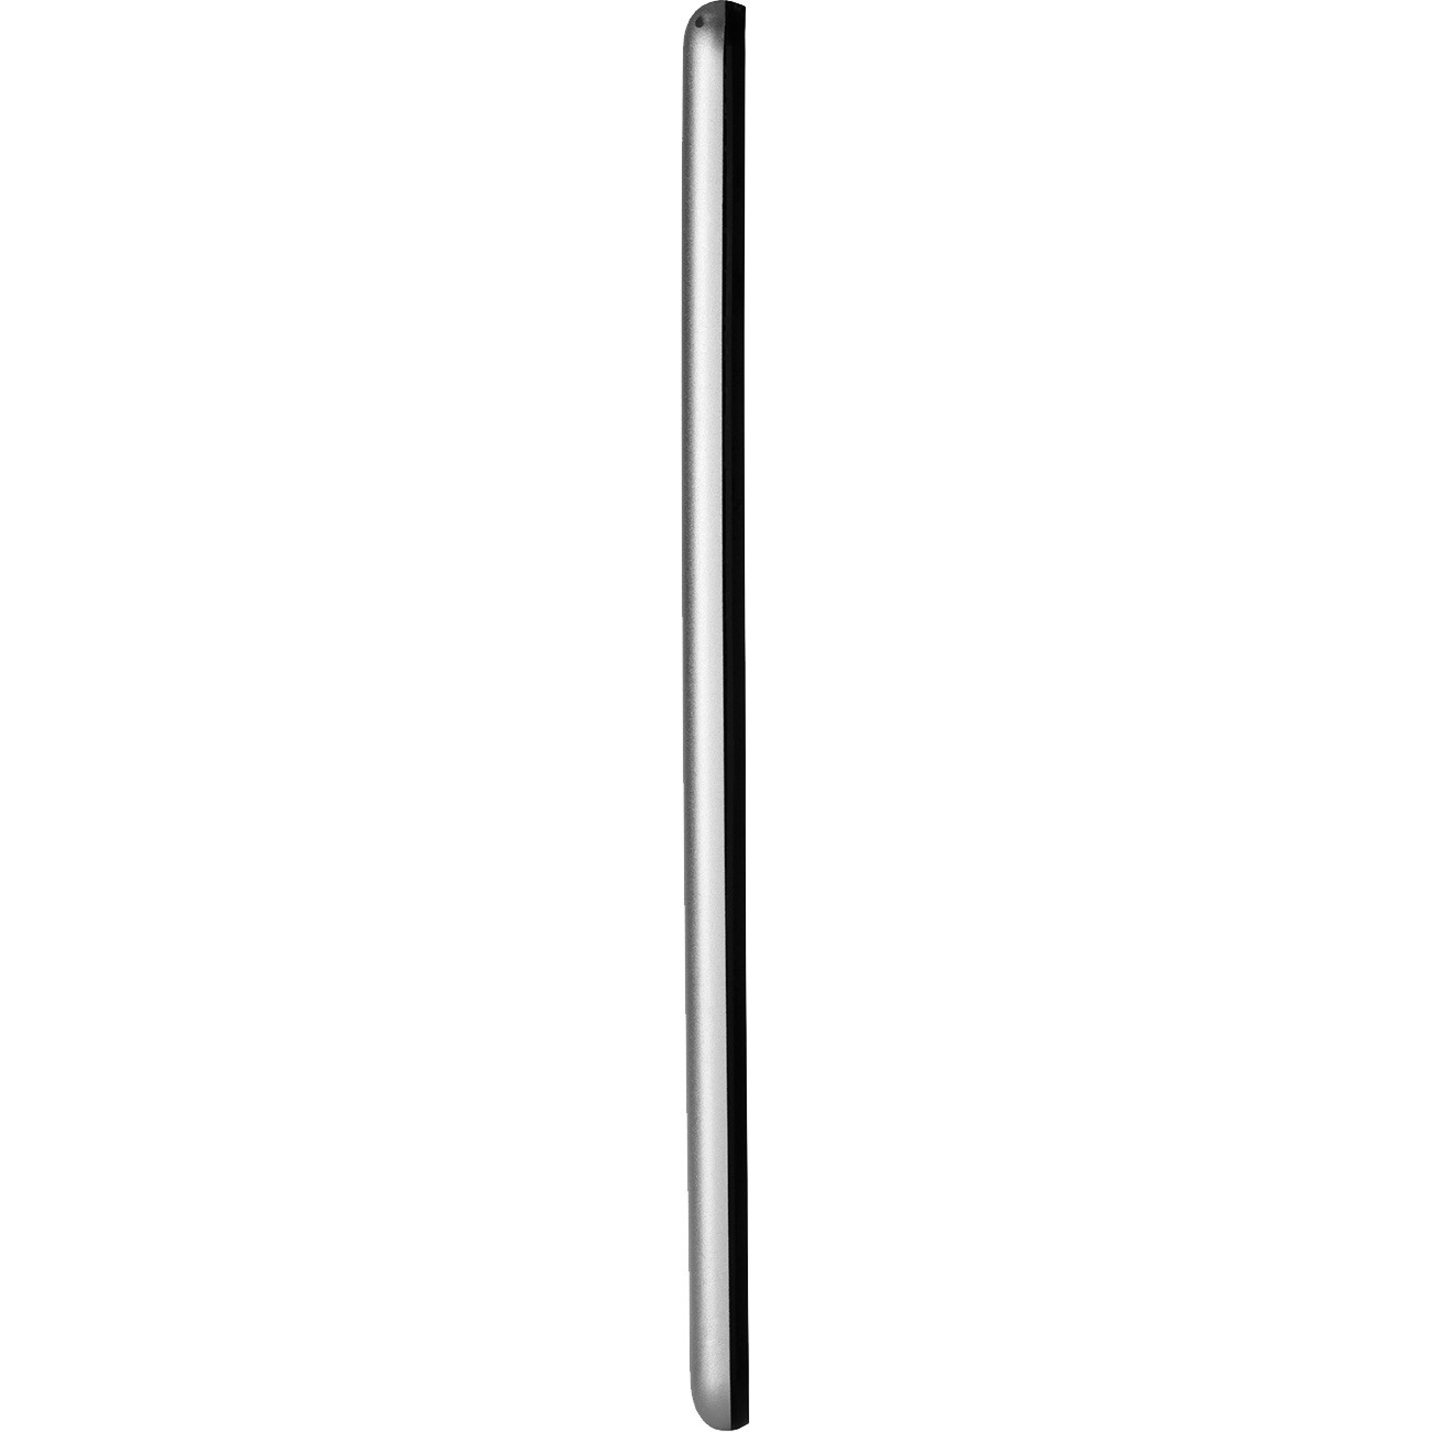 AARP RealPad MA7BX2 Tablet, 7.9", 1 GB, 16 GB Storage, Android 4.4 KitKat, Black - image 4 of 6